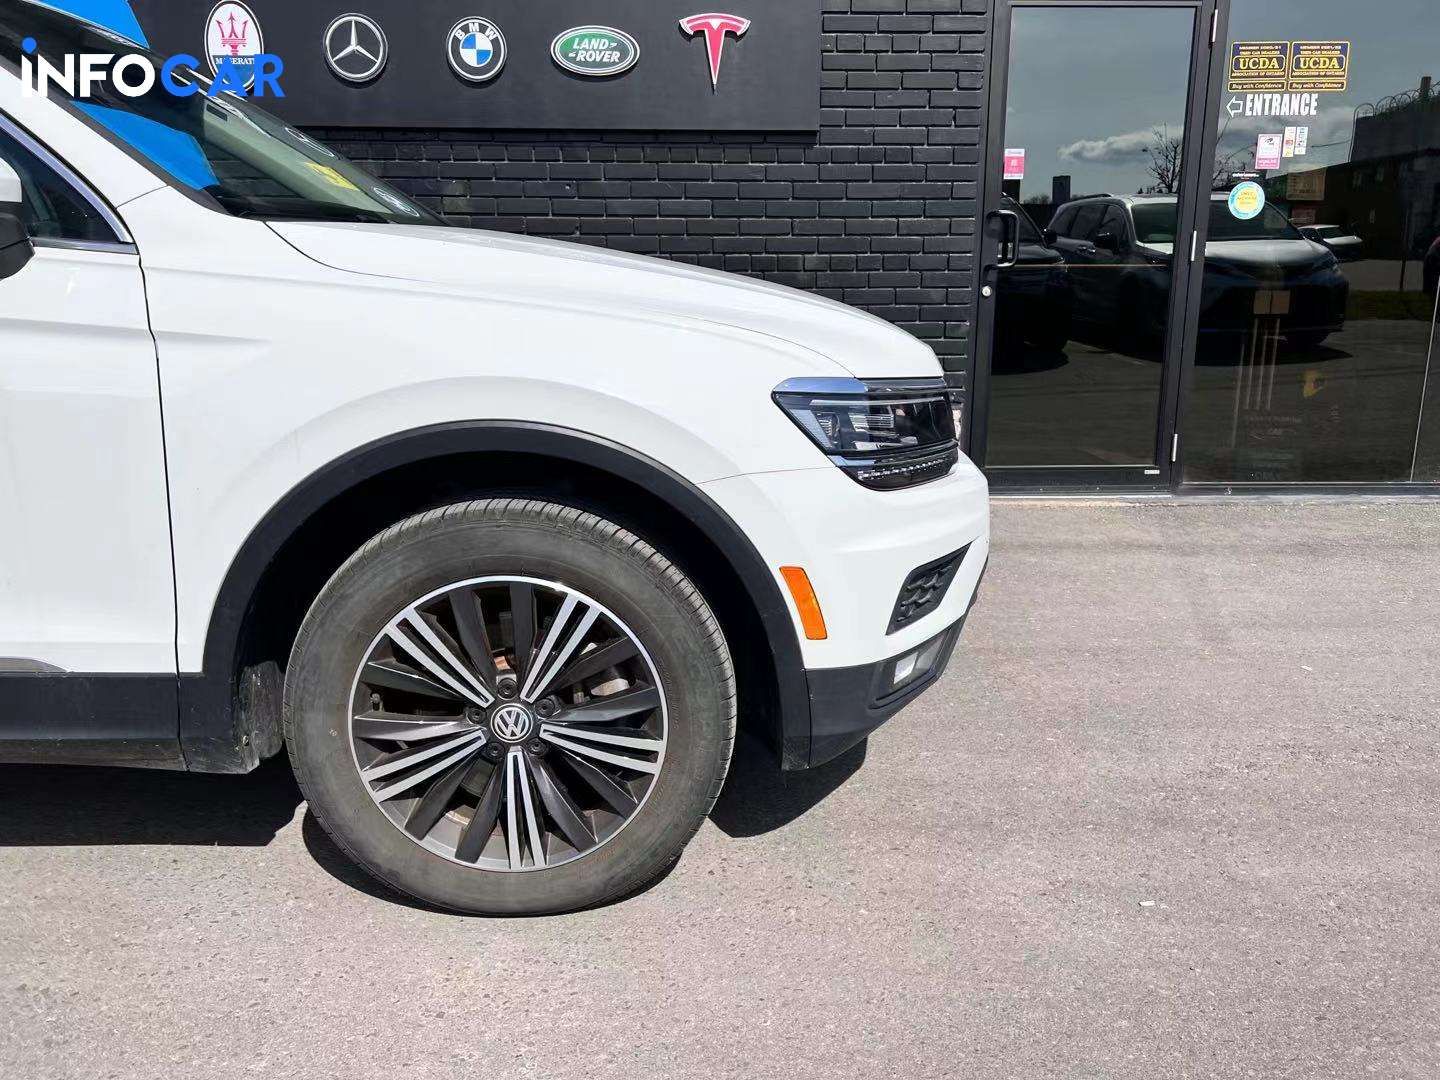 2018 Volkswagen Tiguan HIGHLINE - INFOCAR - Toronto Auto Trading Platform